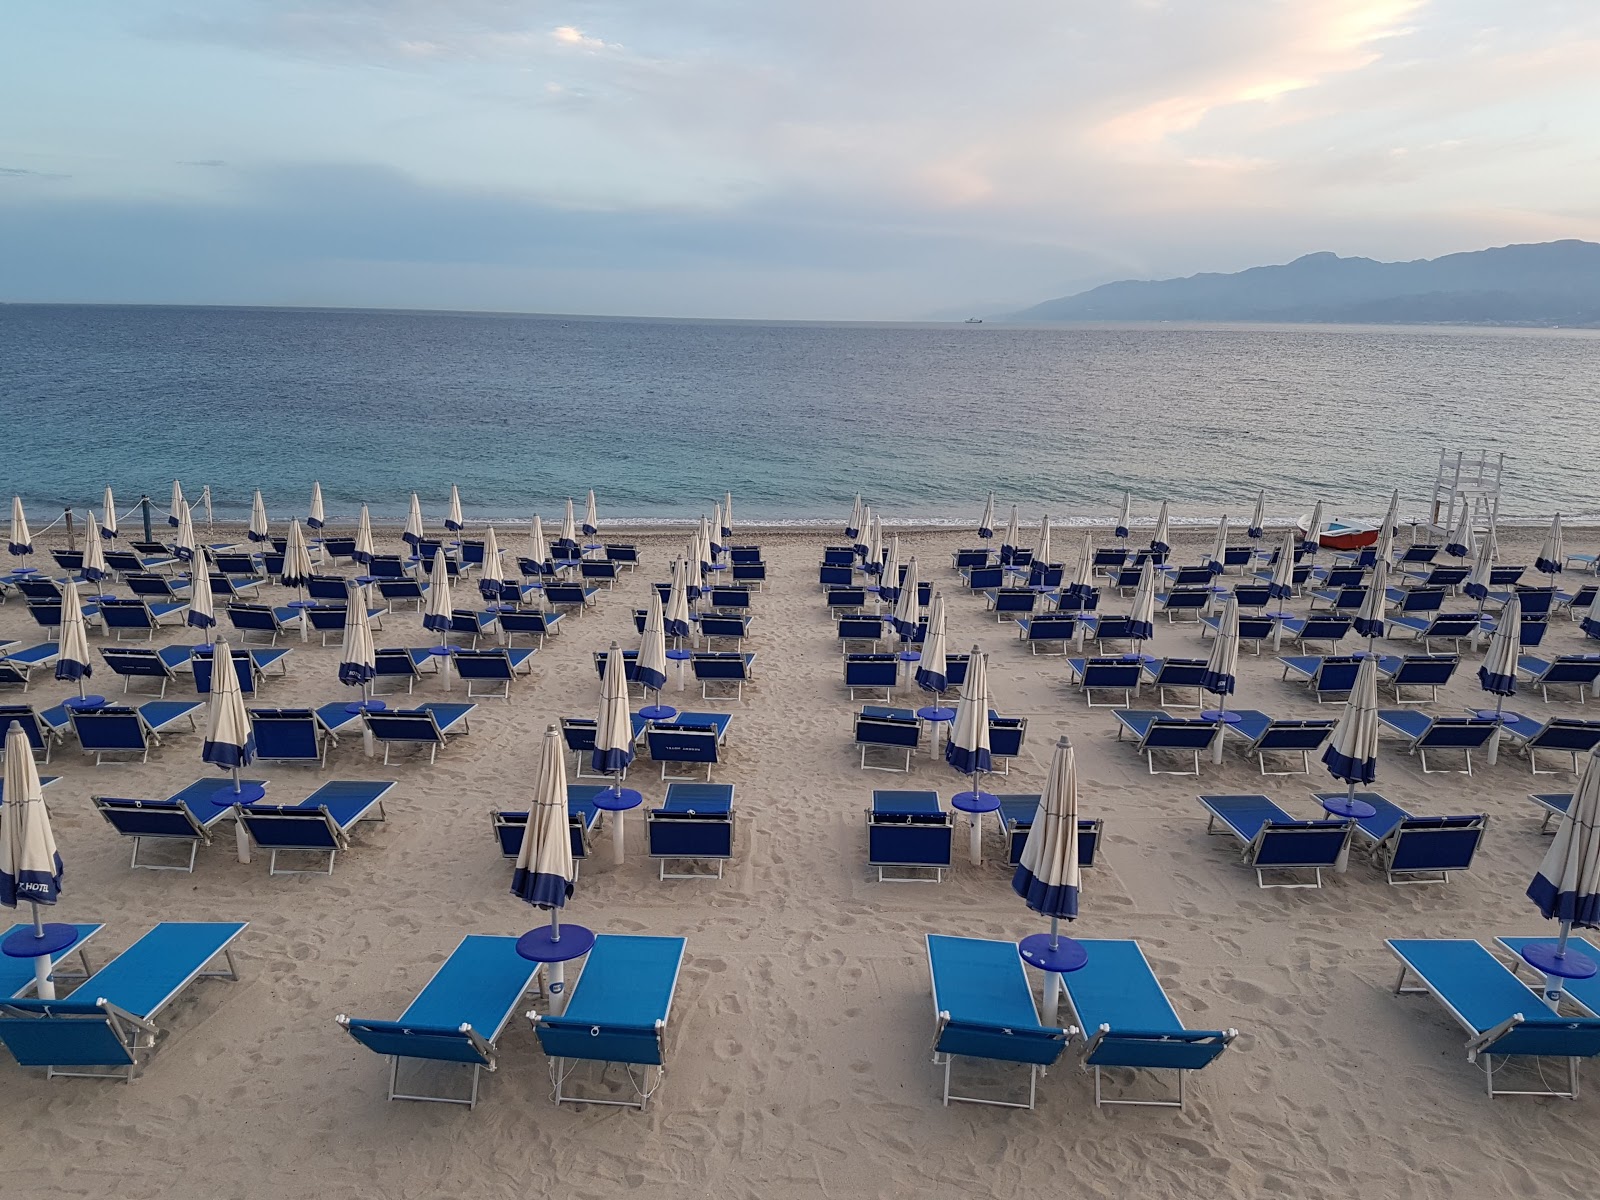 Foto de Spiaggia Di Catona área de resort de praia